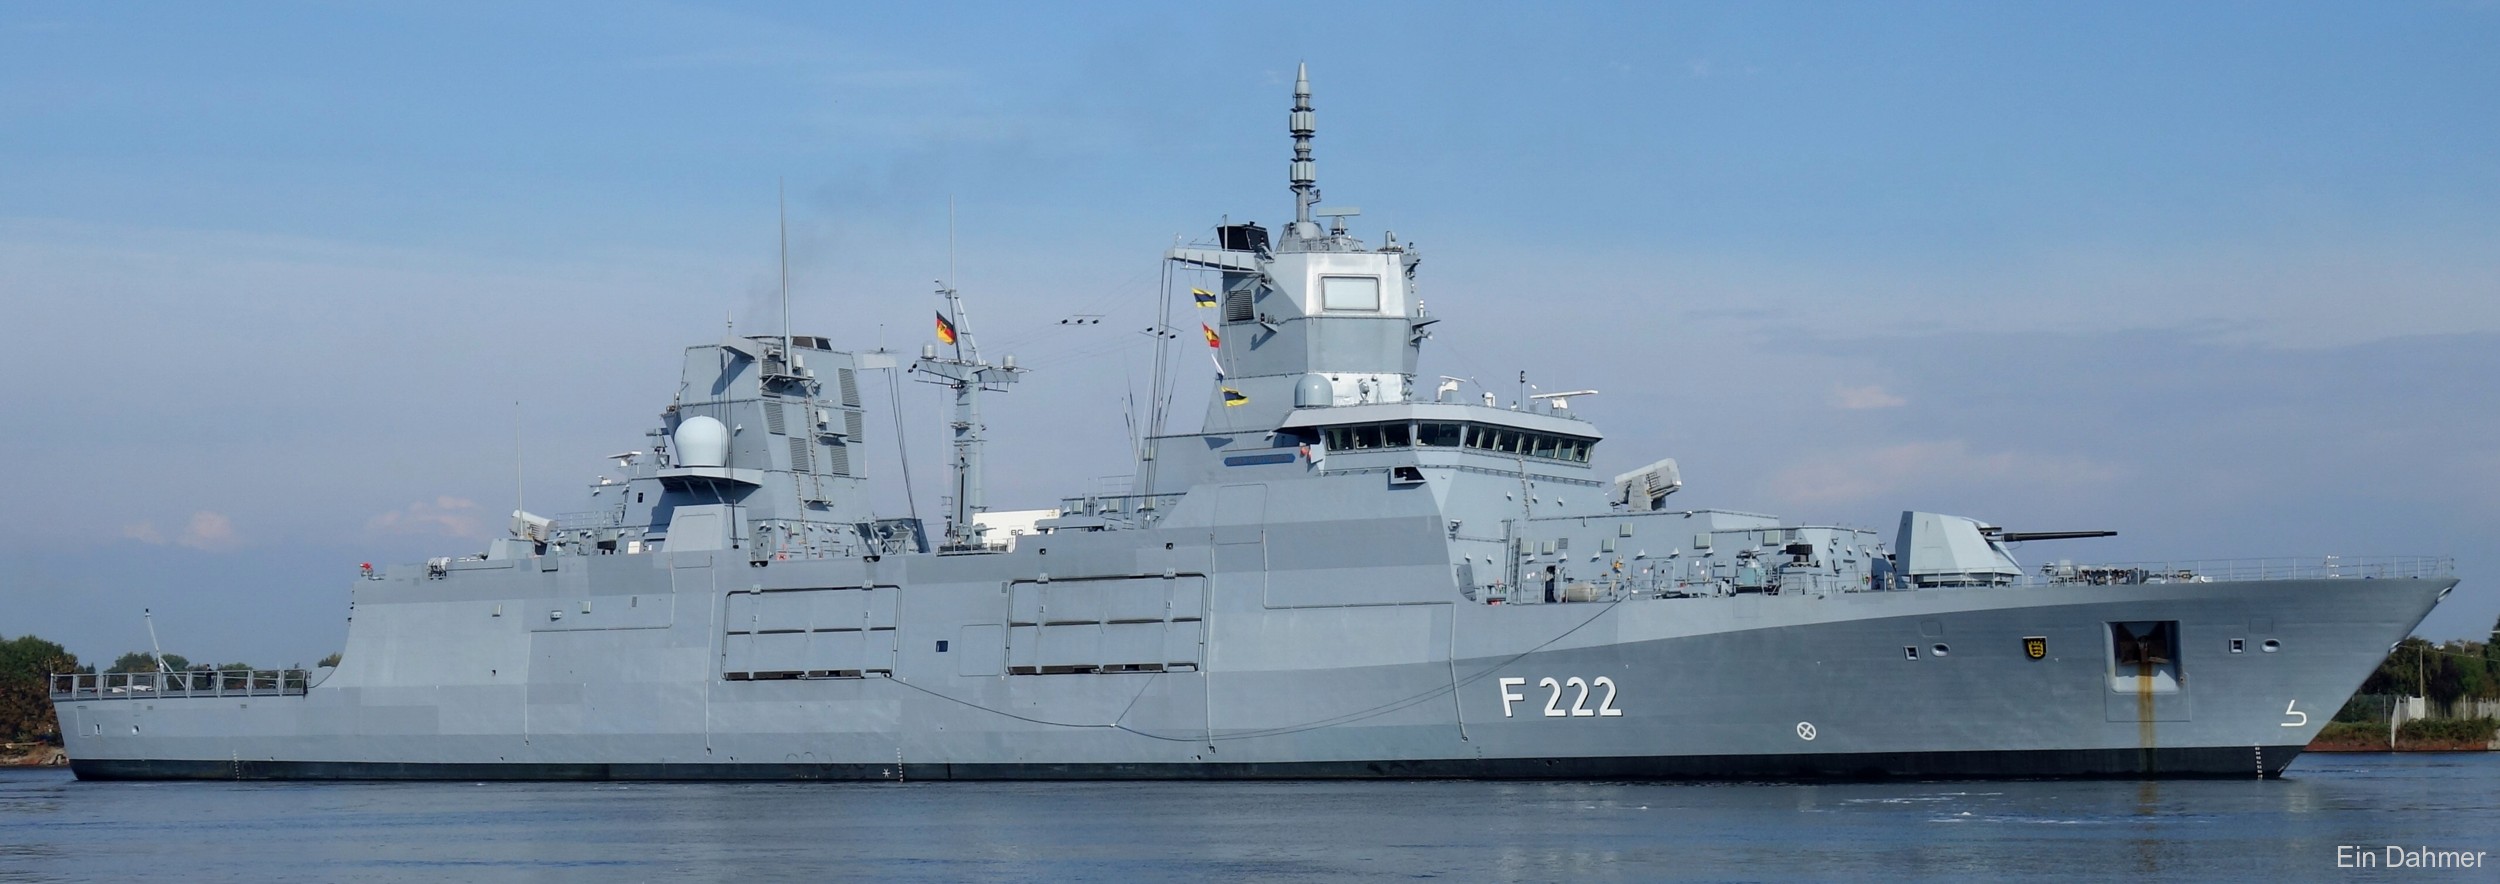 f-222 fgs baden-württemberg type 125 class frigate german navy 04